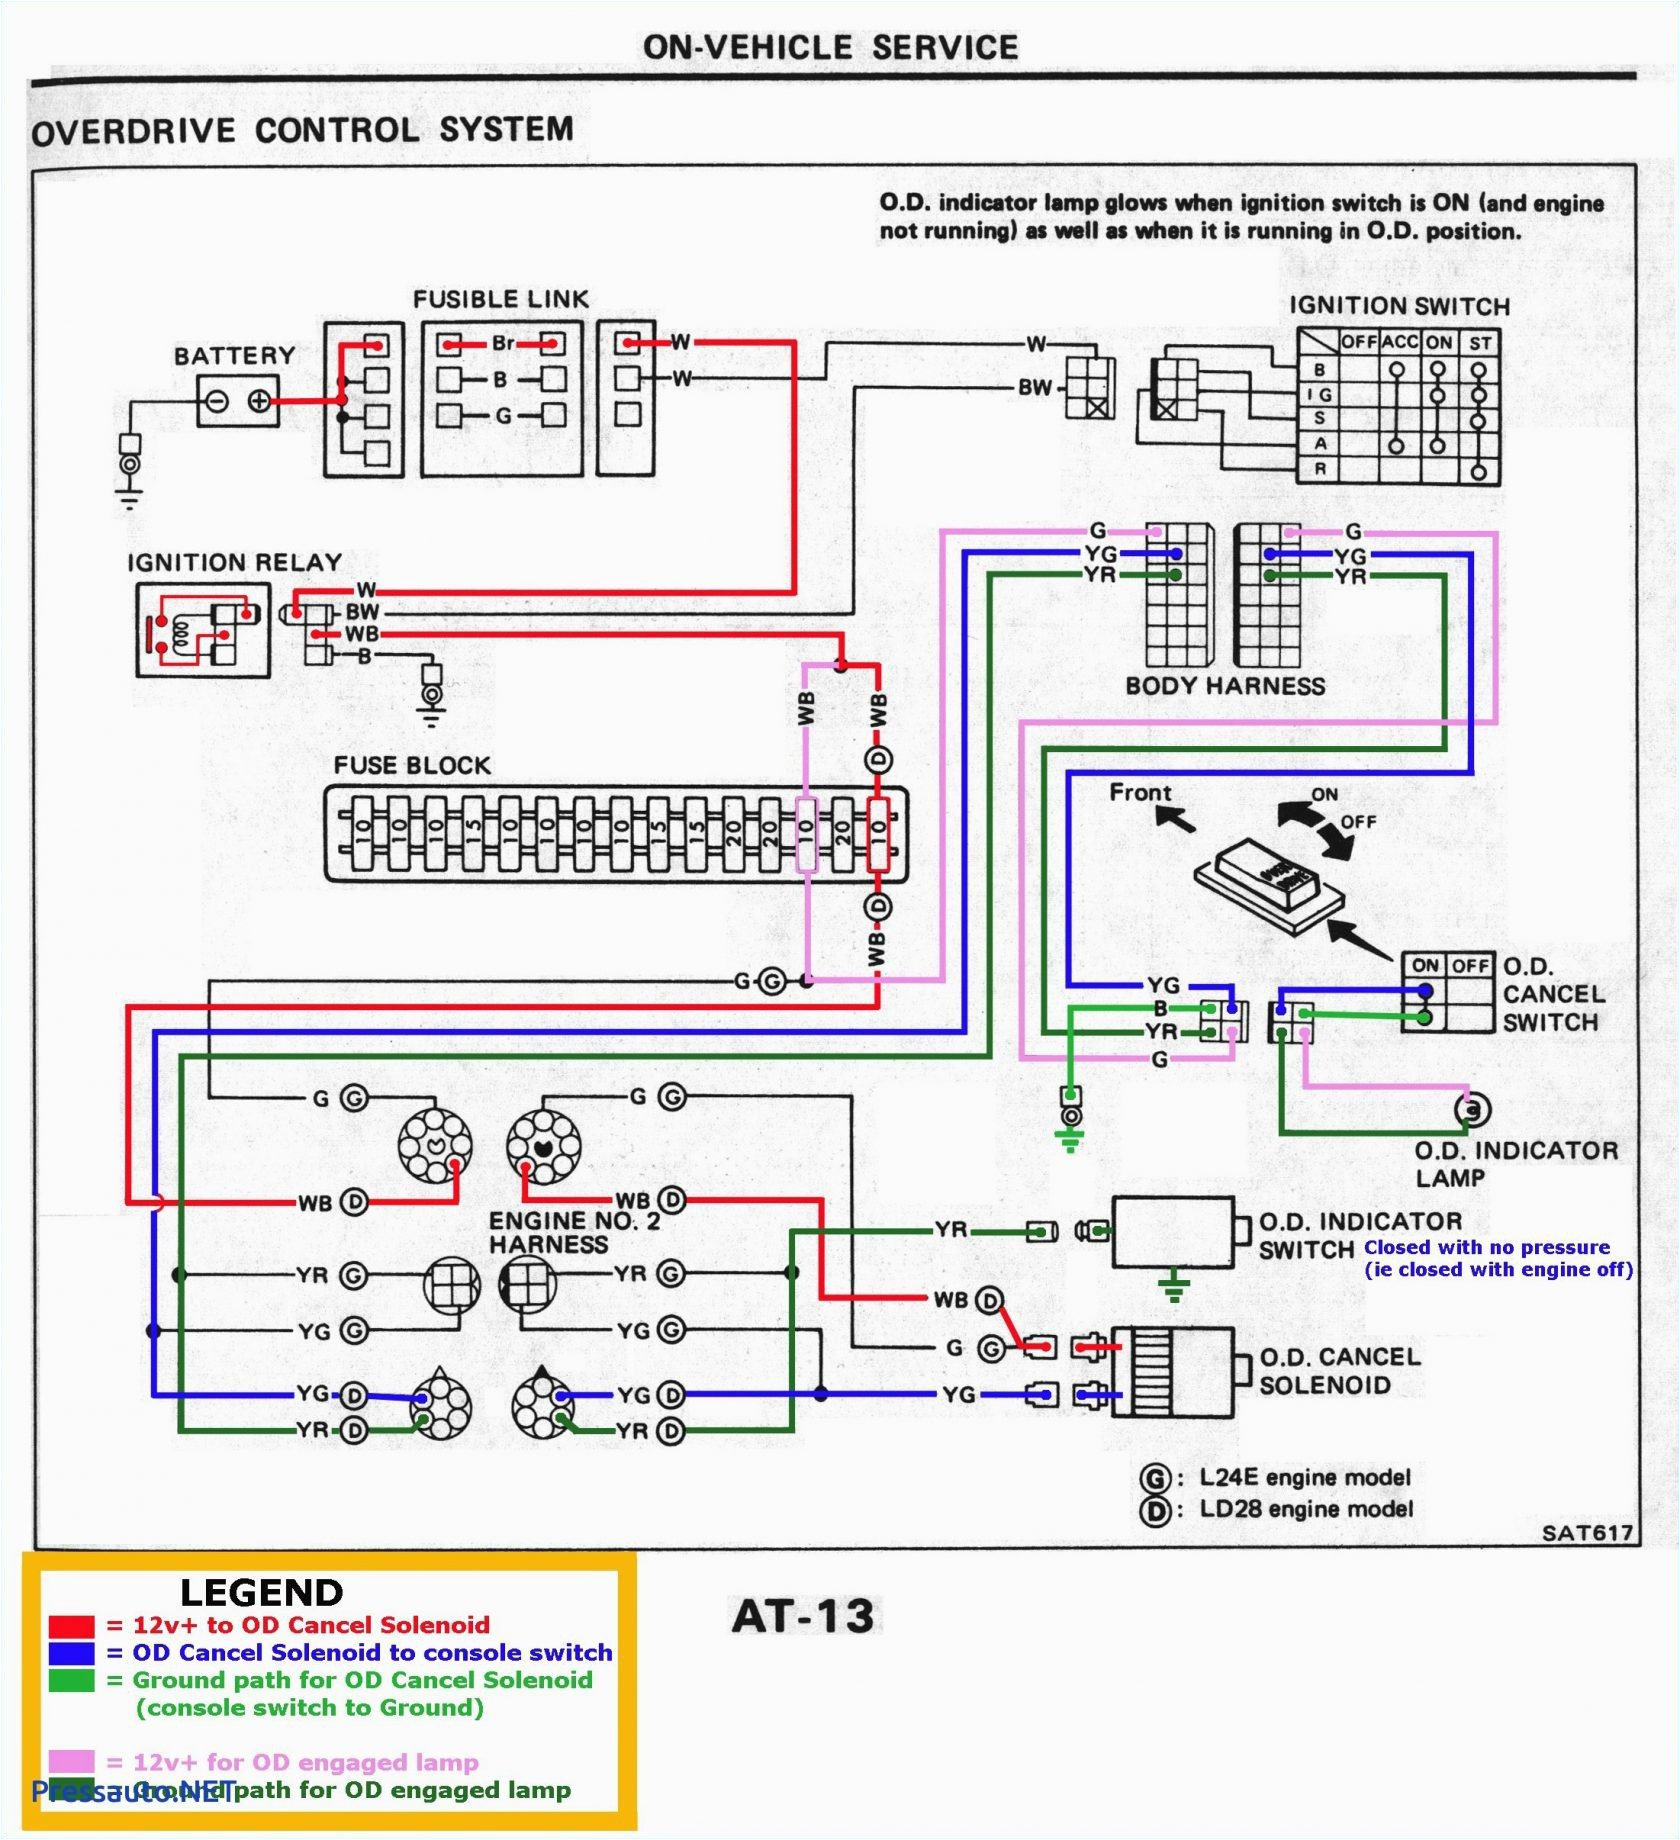 tsubaki wiring diagram wiring diagram today tsubaki wiring diagram